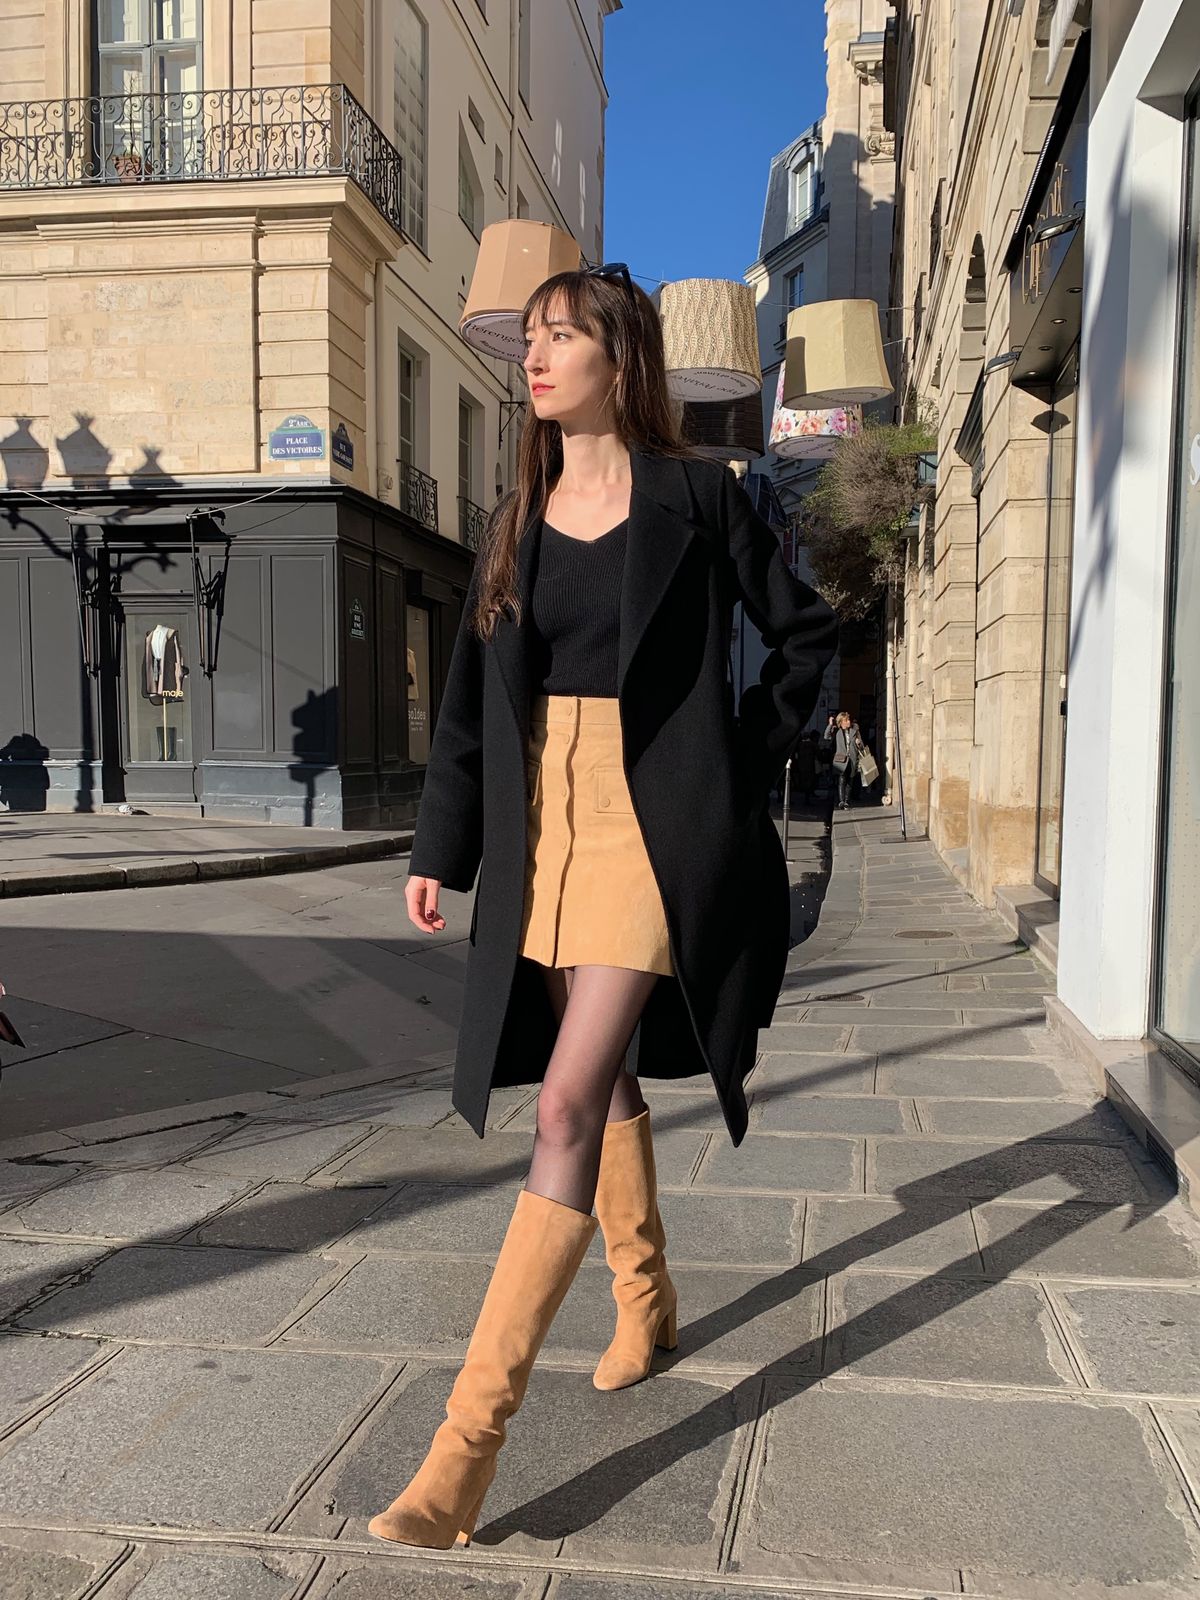 Parisian Winter Look: Jonak Beige Suede Knee-High Boots, Mango Suede Beige Skirt, Black wool wrap coat